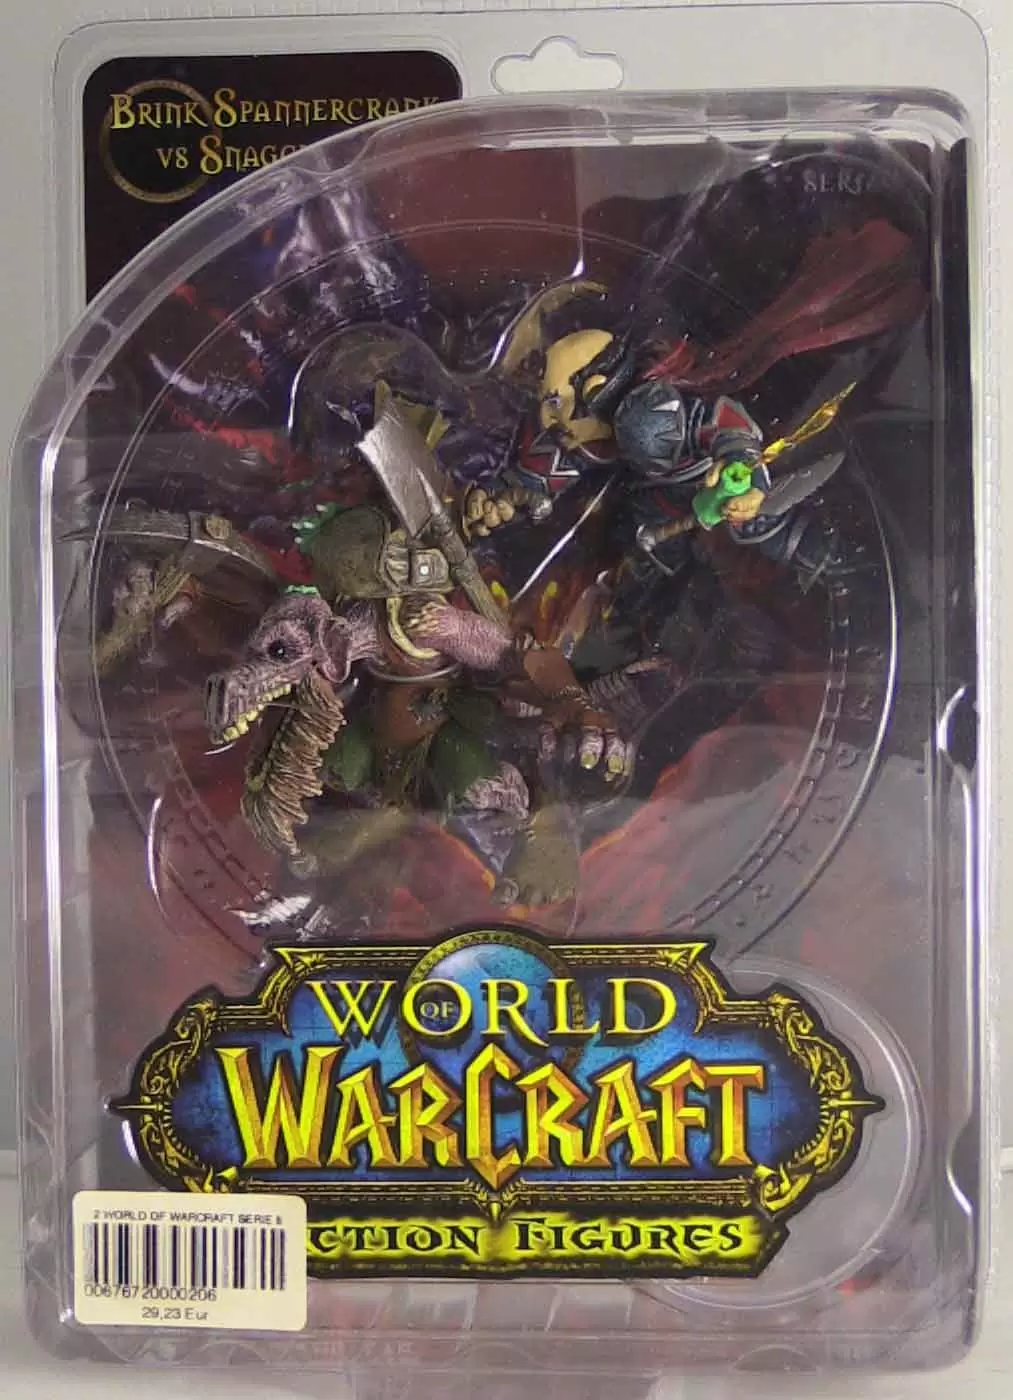 World of Warcraft Action Figures (WOW) - Brink Spannercranck & Snaggle